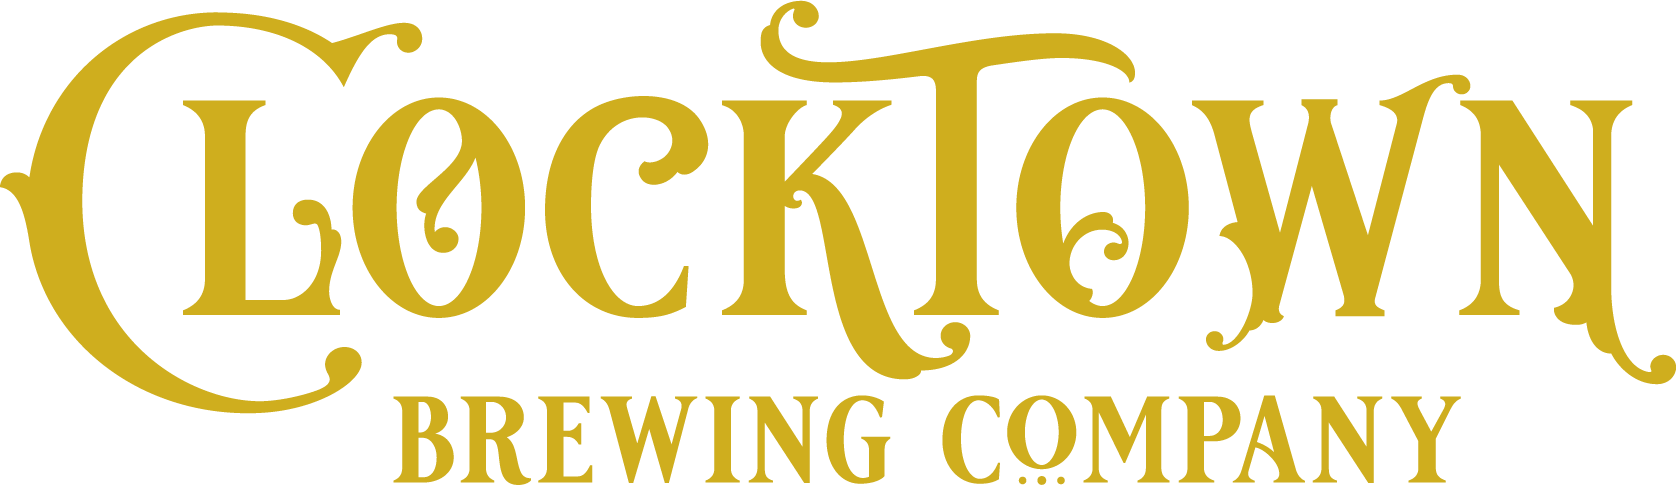 Clocktown Brewing Co Logo